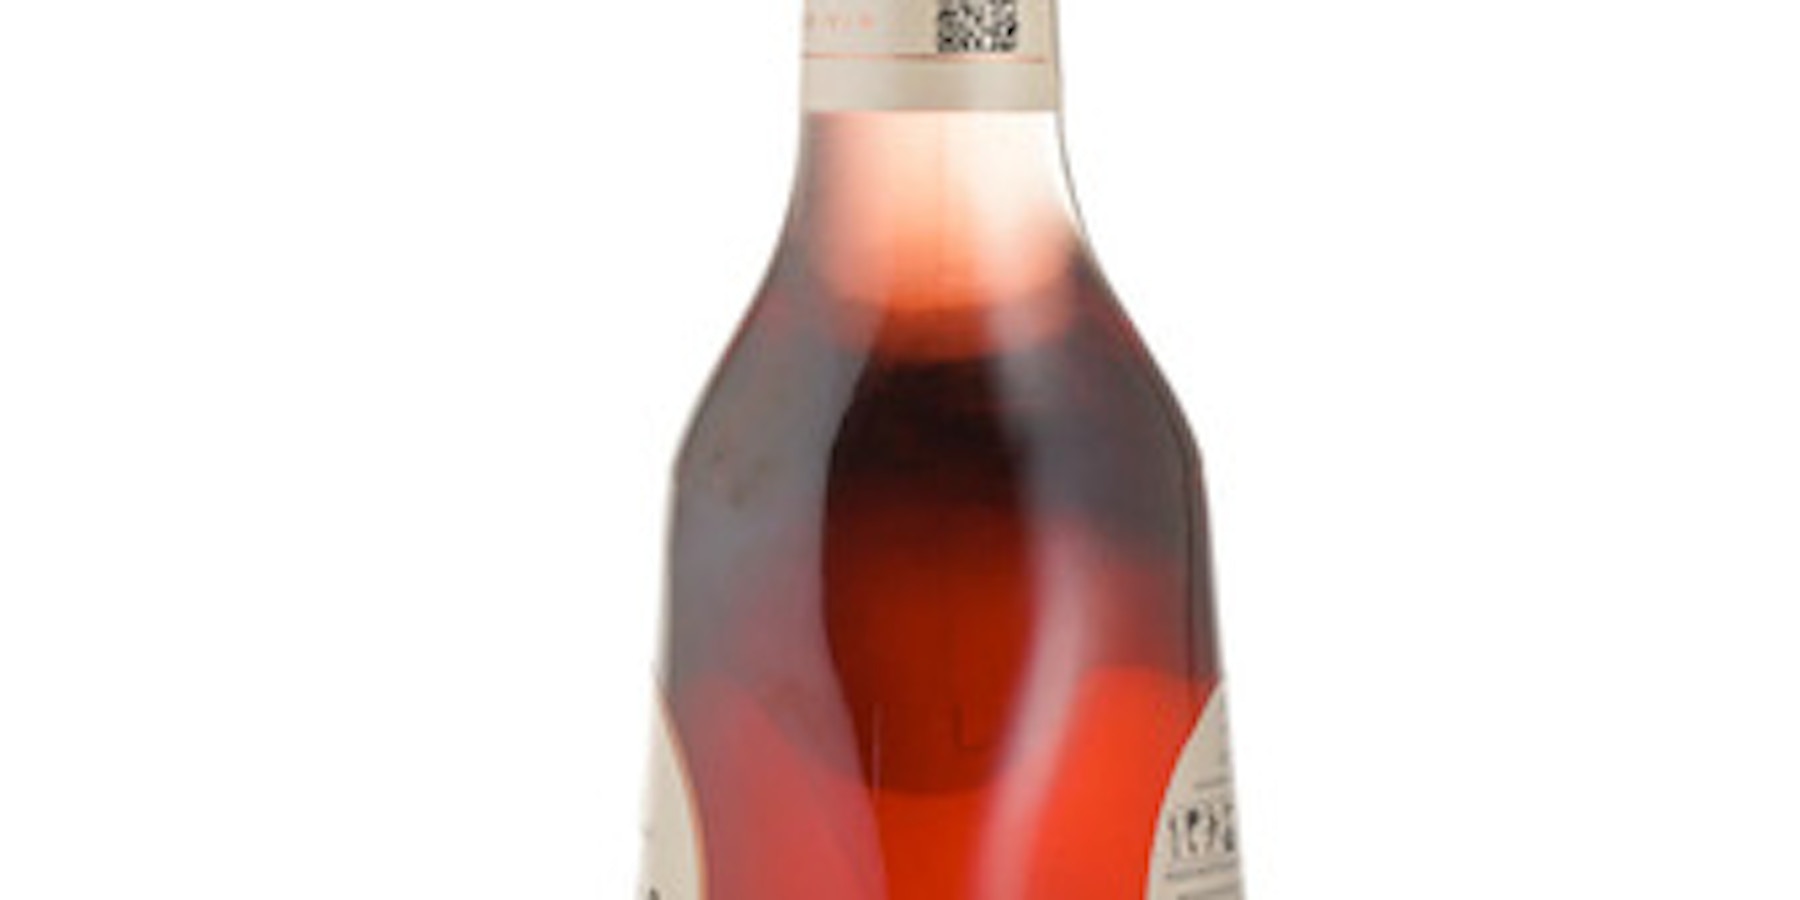 Botella de Mateus Rose com QR Code